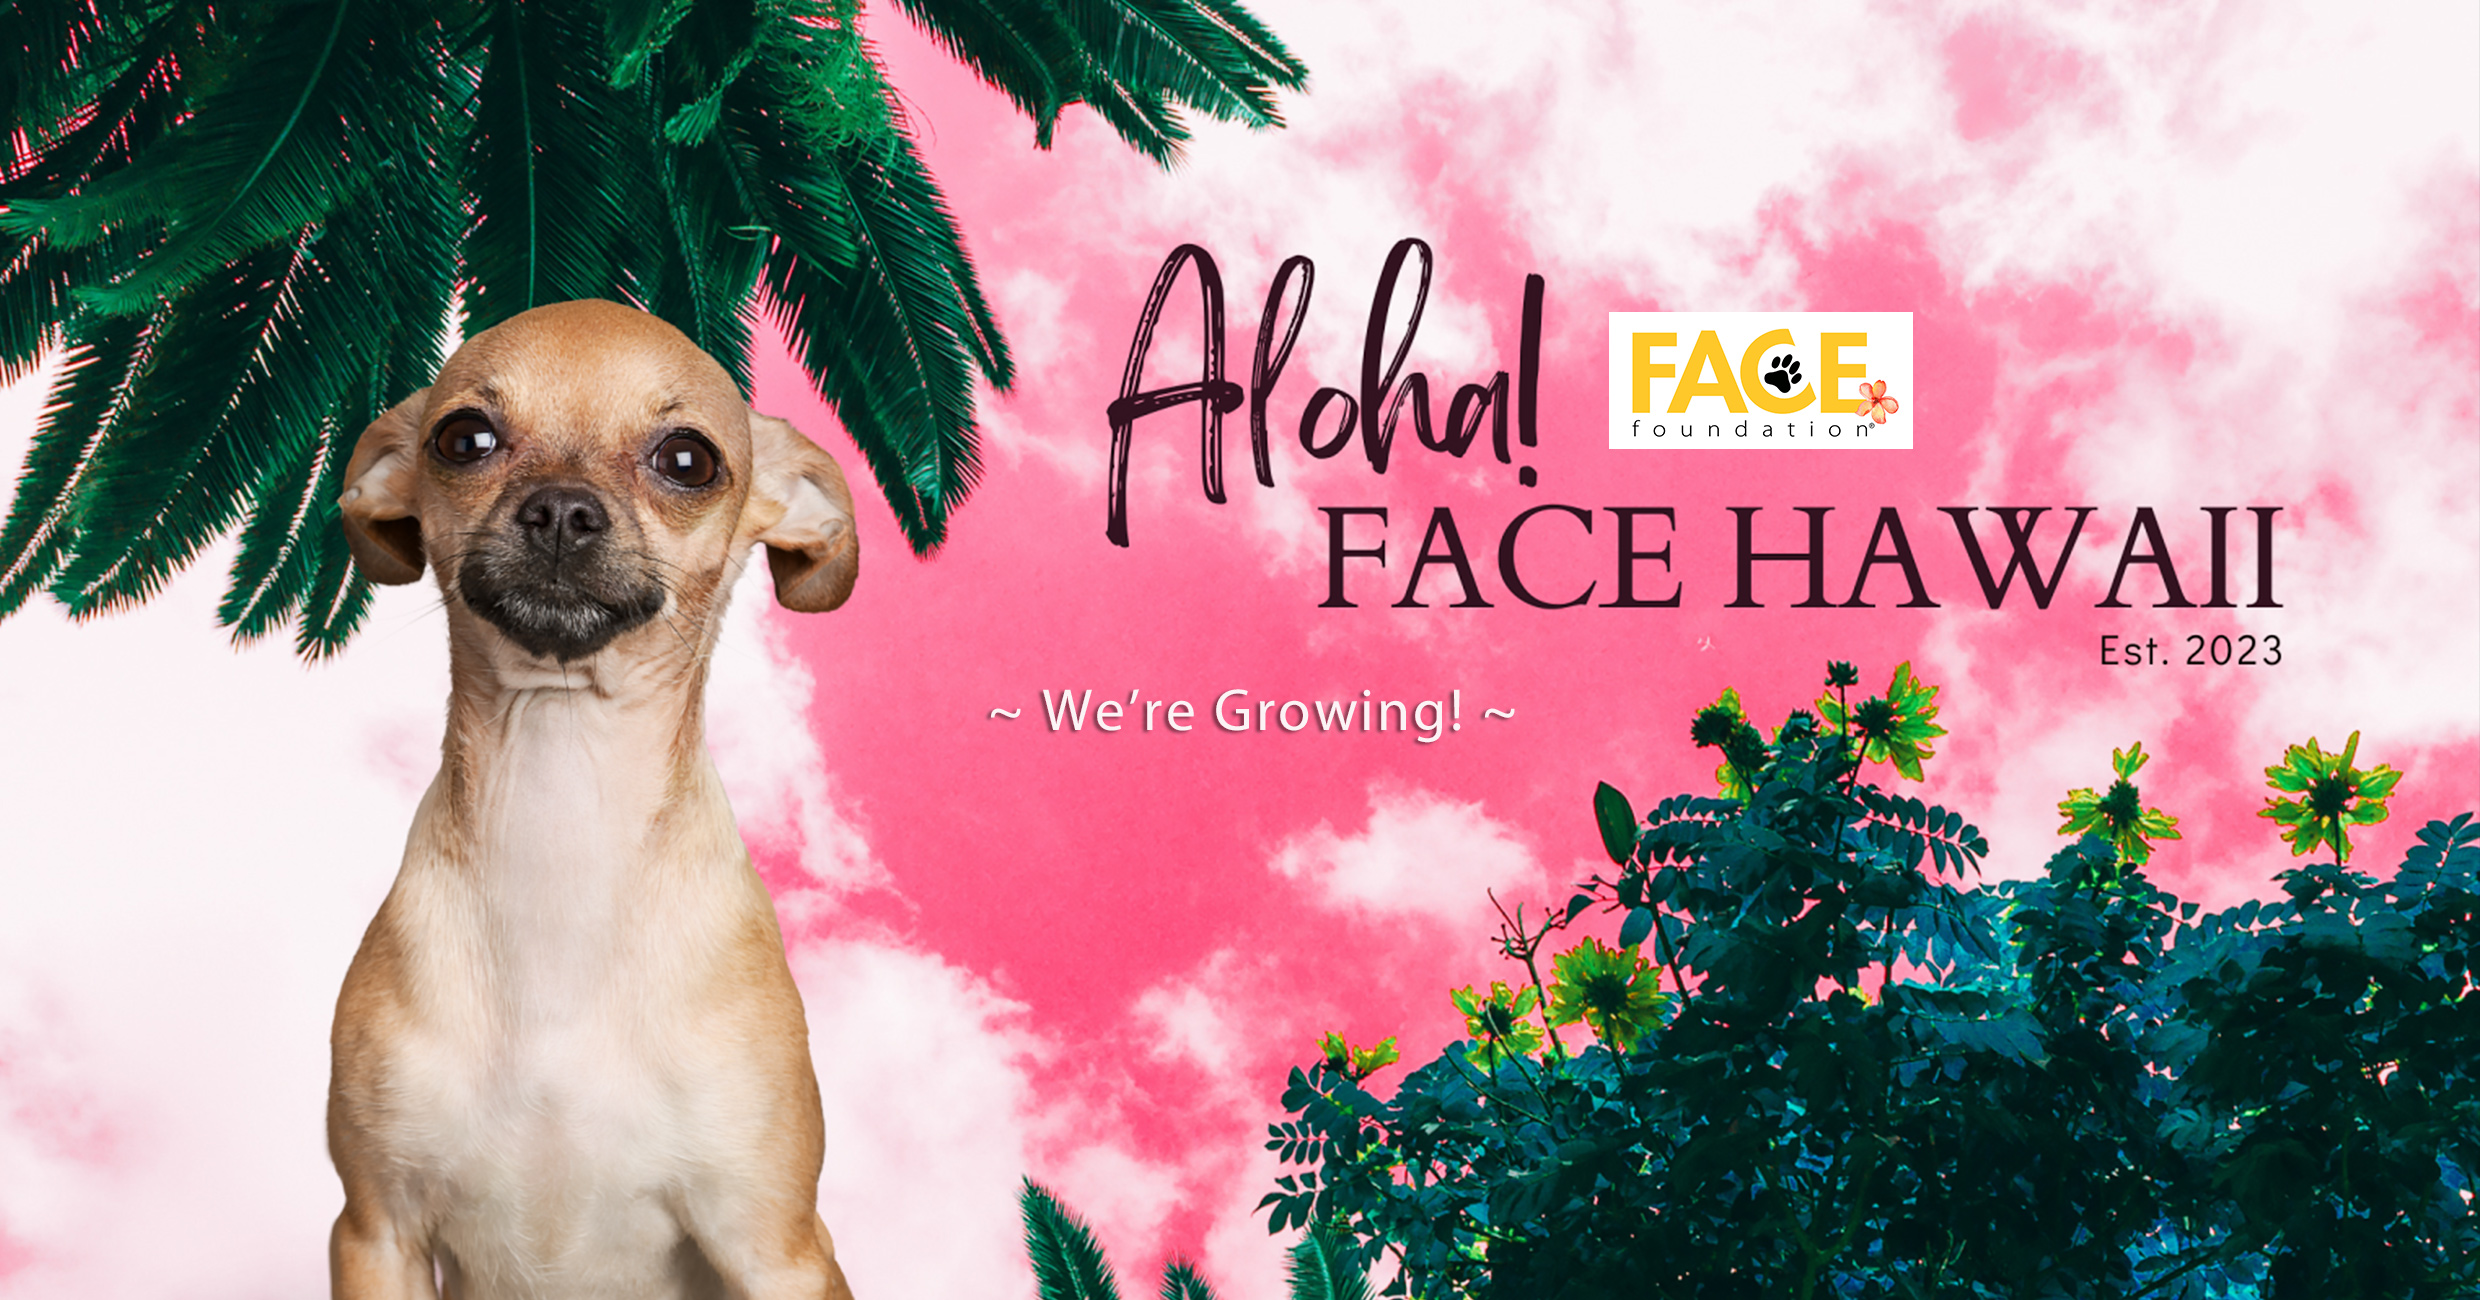 FACE Foundation Hawaii